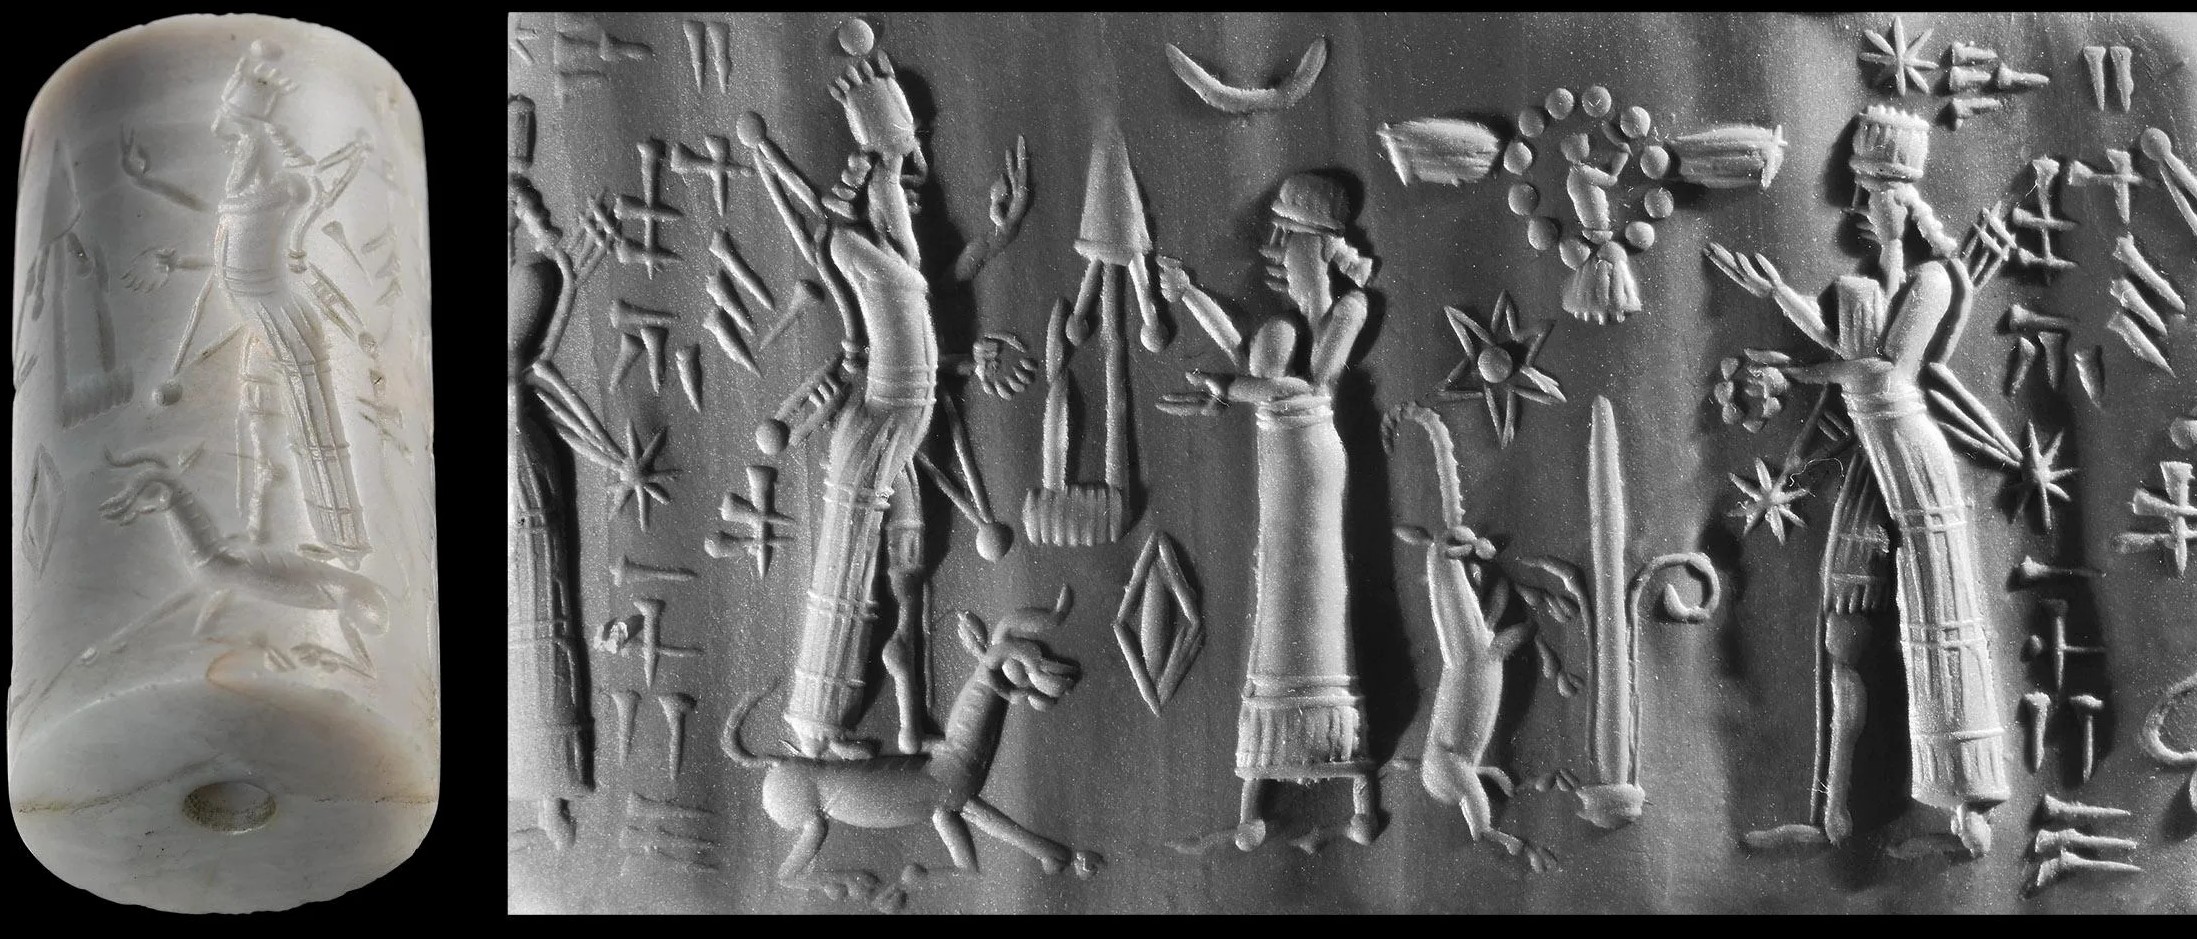 7e - Ninurta, his mother Ninhursag, & Goddess of War Inanna, with Sun god Utu in his Sun sky-disc / flying saucer above